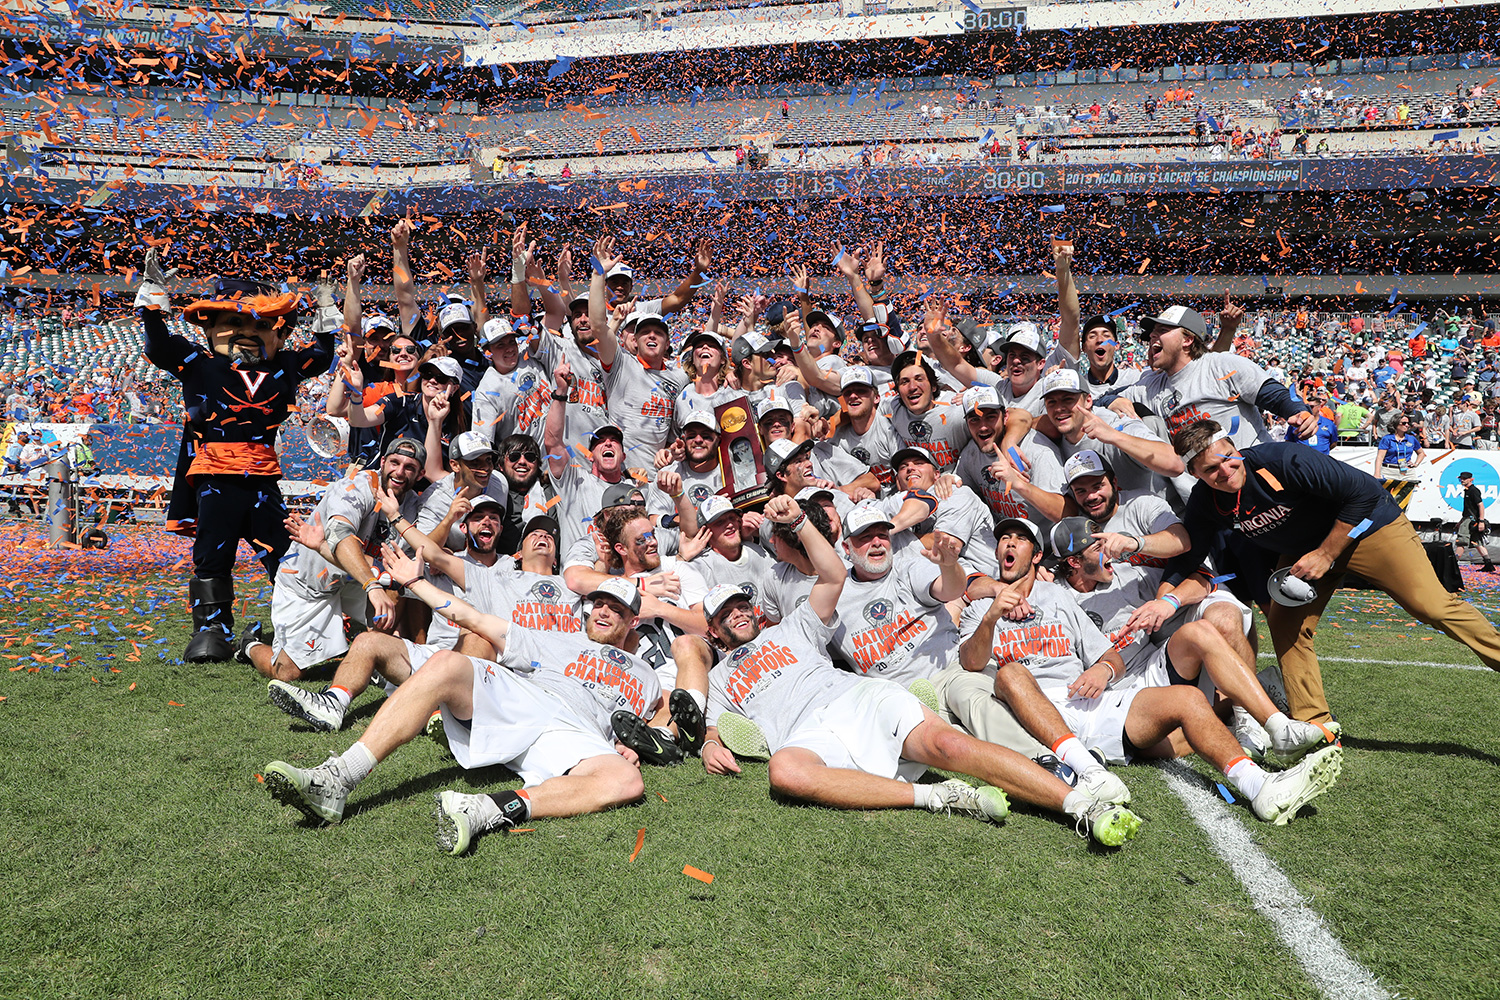 The UVA men’s lacrosse team celebrating their NCAA win